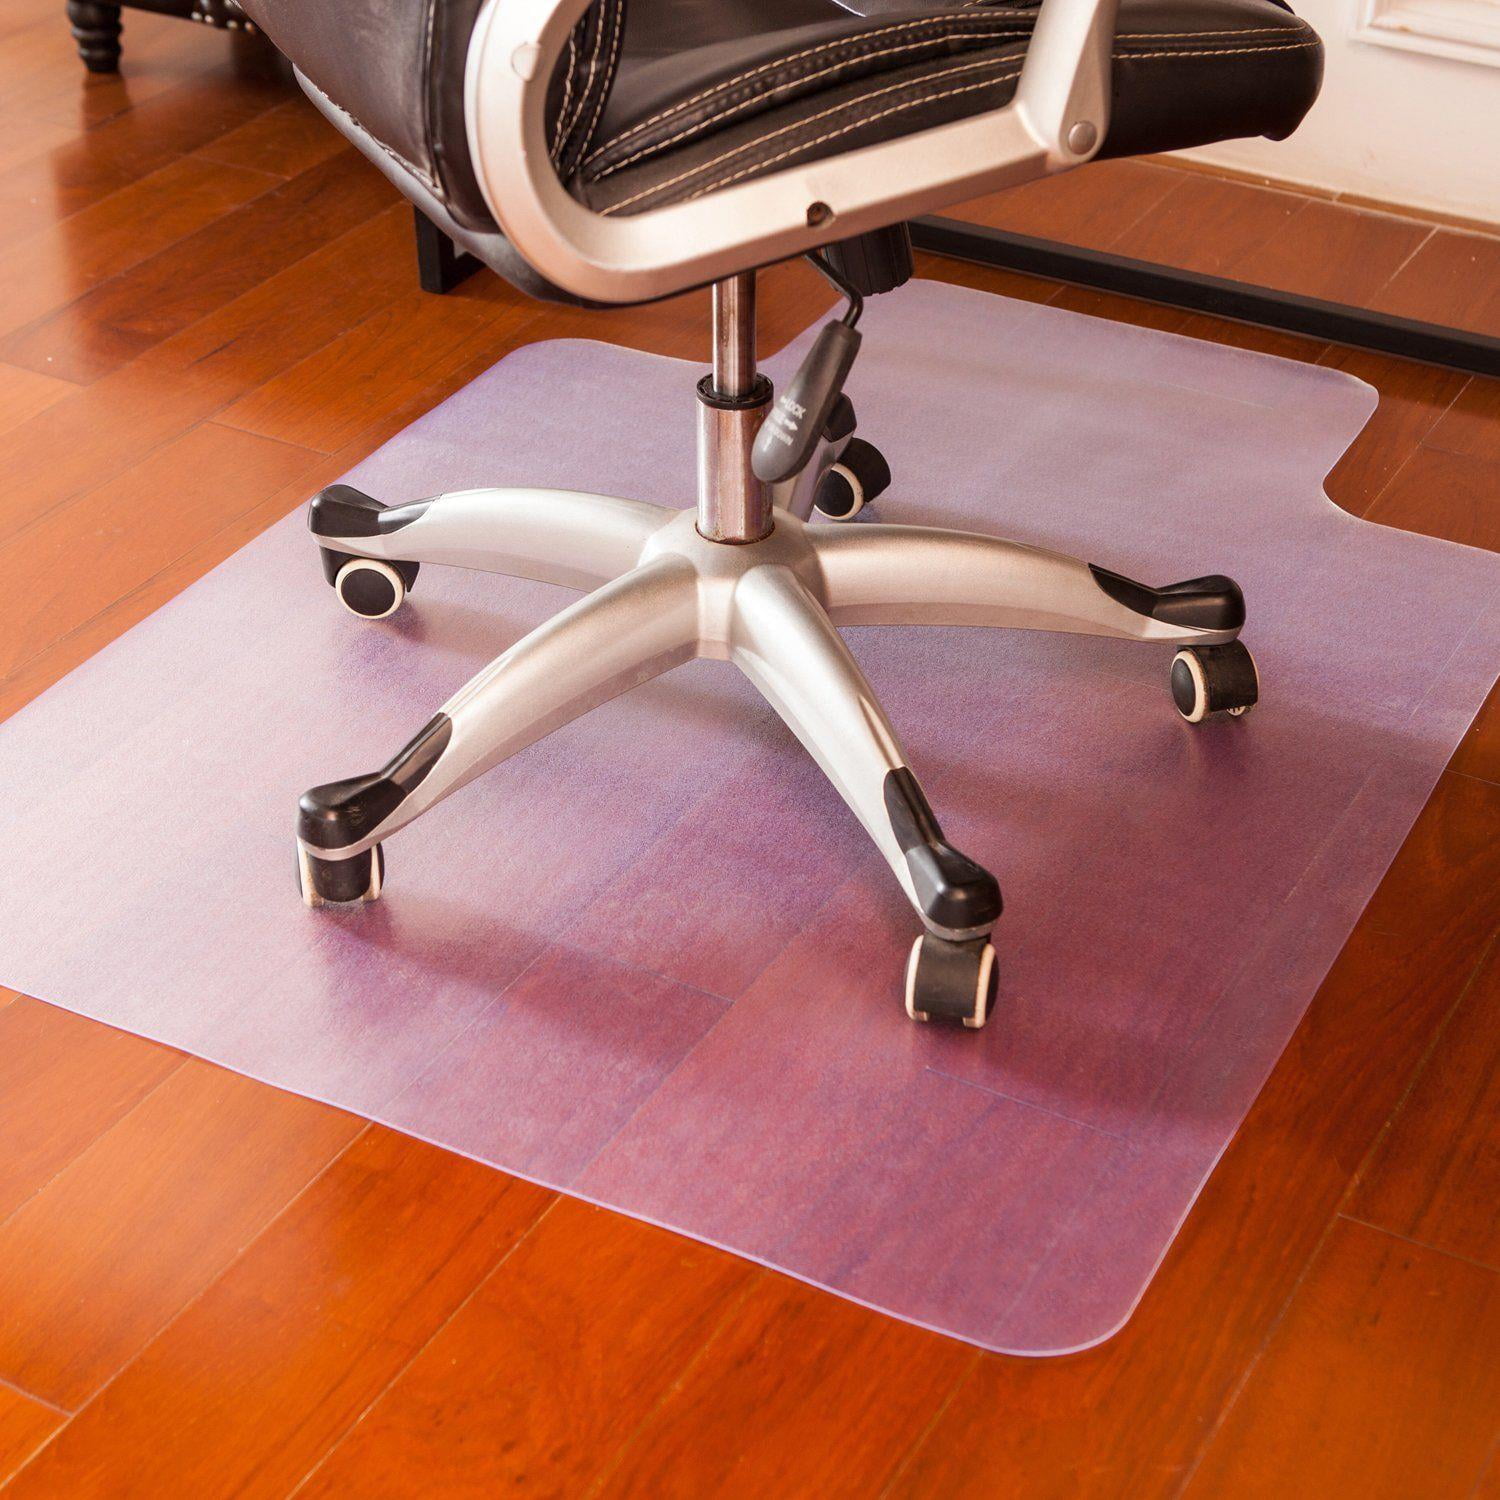 Dark gray 140*90cm Lurowo Office Chair Mat Multi-Purpose Chair Carpet for Office Home PVC Non-Slip Floor Protection Mat Hard Flooring